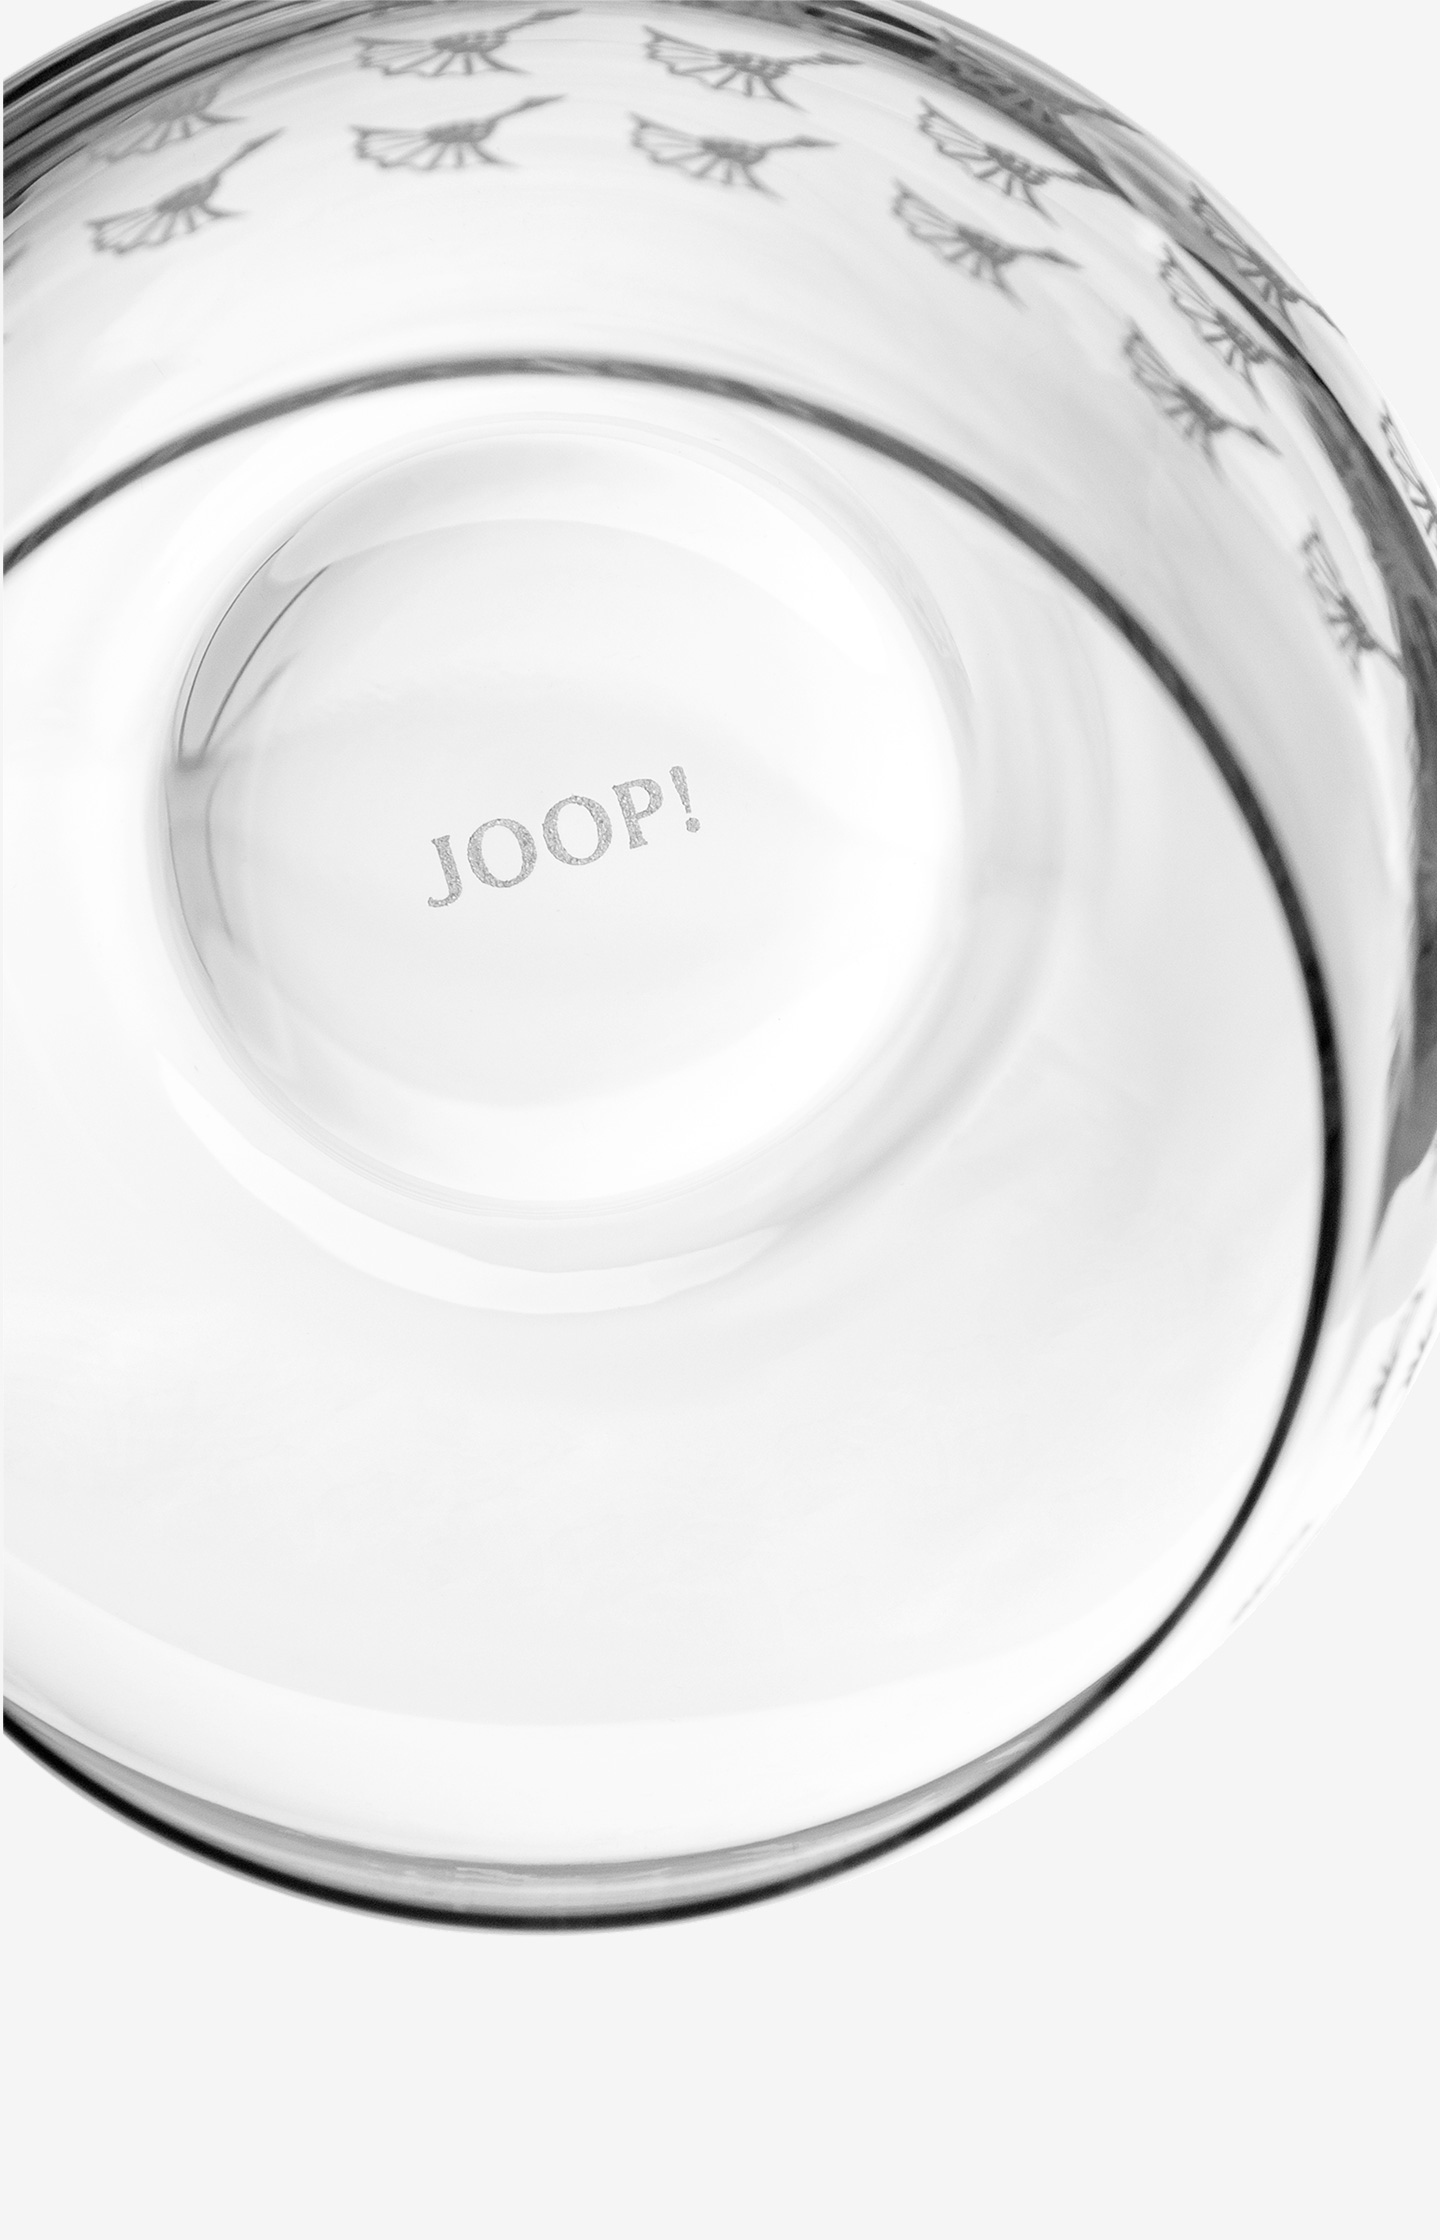 Shop Faded in set glass Online - the JOOP! 2 water Cornflower - of